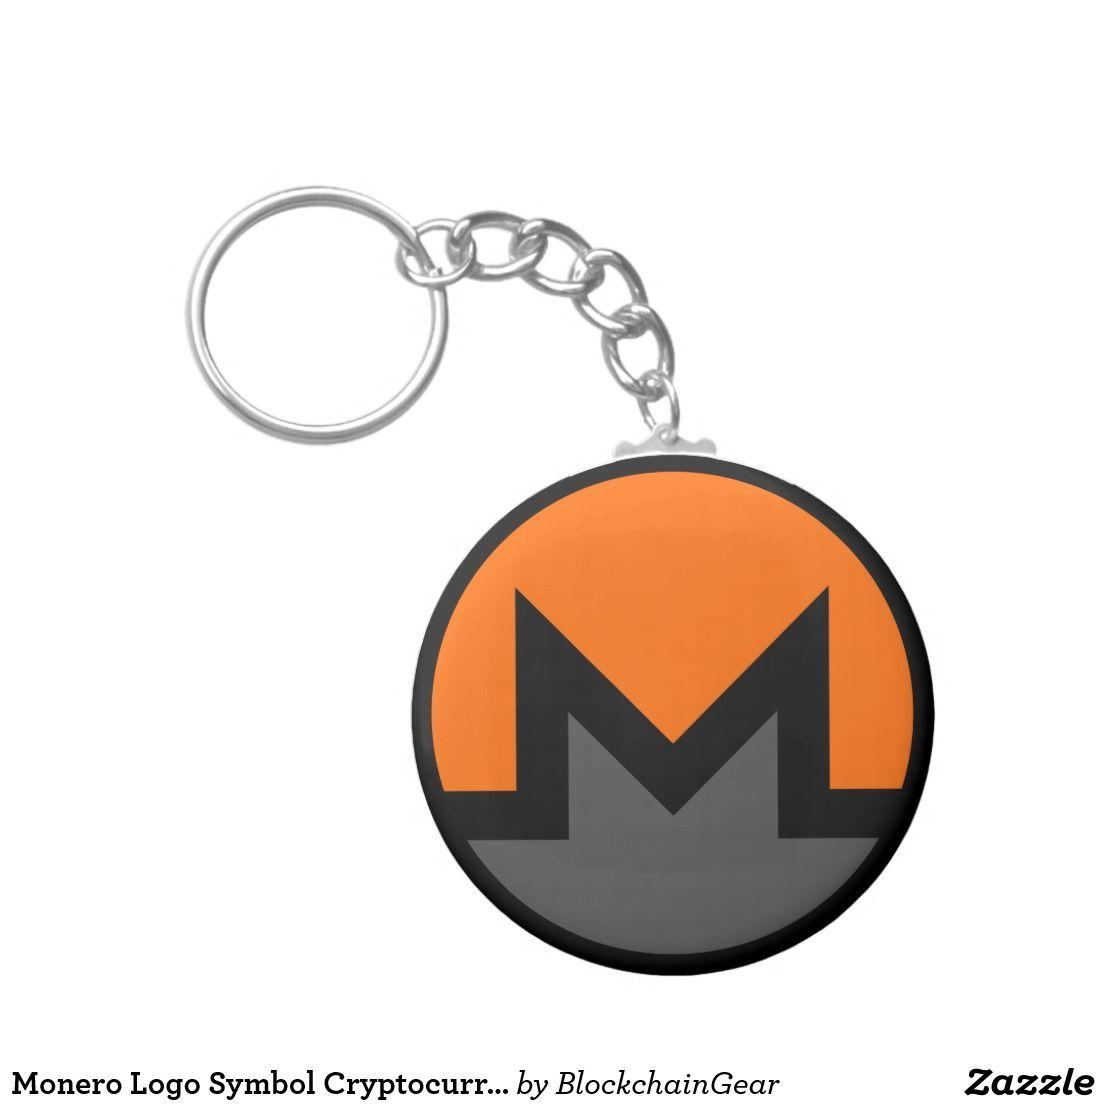 Monero Logo - Monero Logo Symbol Cryptocurrency Coin Keychain. Blockchain Gear